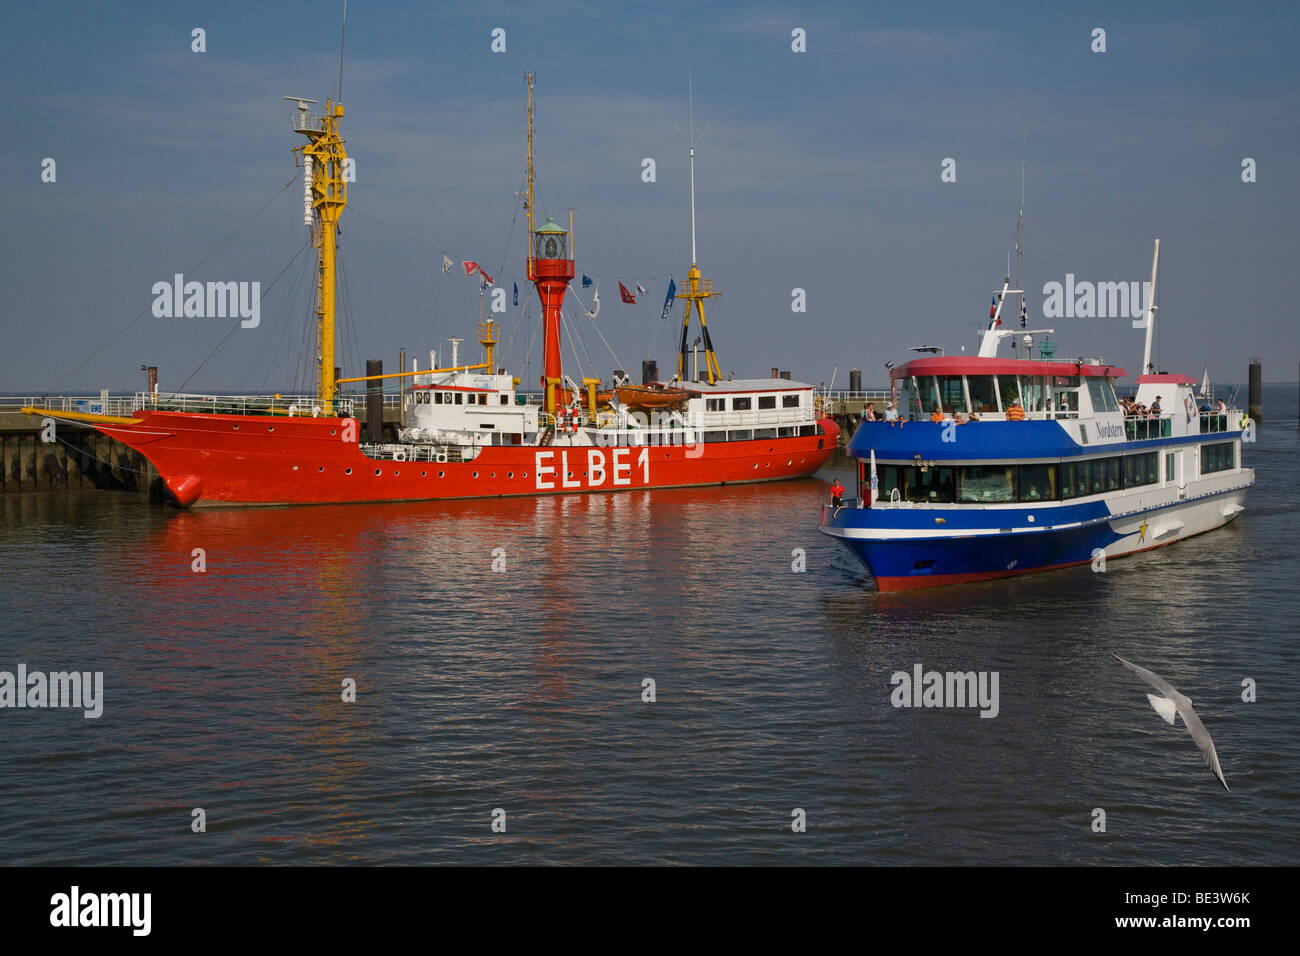 Germany, Niedersachsen, Cuxhaven, Feuerschiff Elbe 1, Bürgermeister O'Swald II and Elbe ferry Nordstern at Cuxhaven harbour. Stock Photo